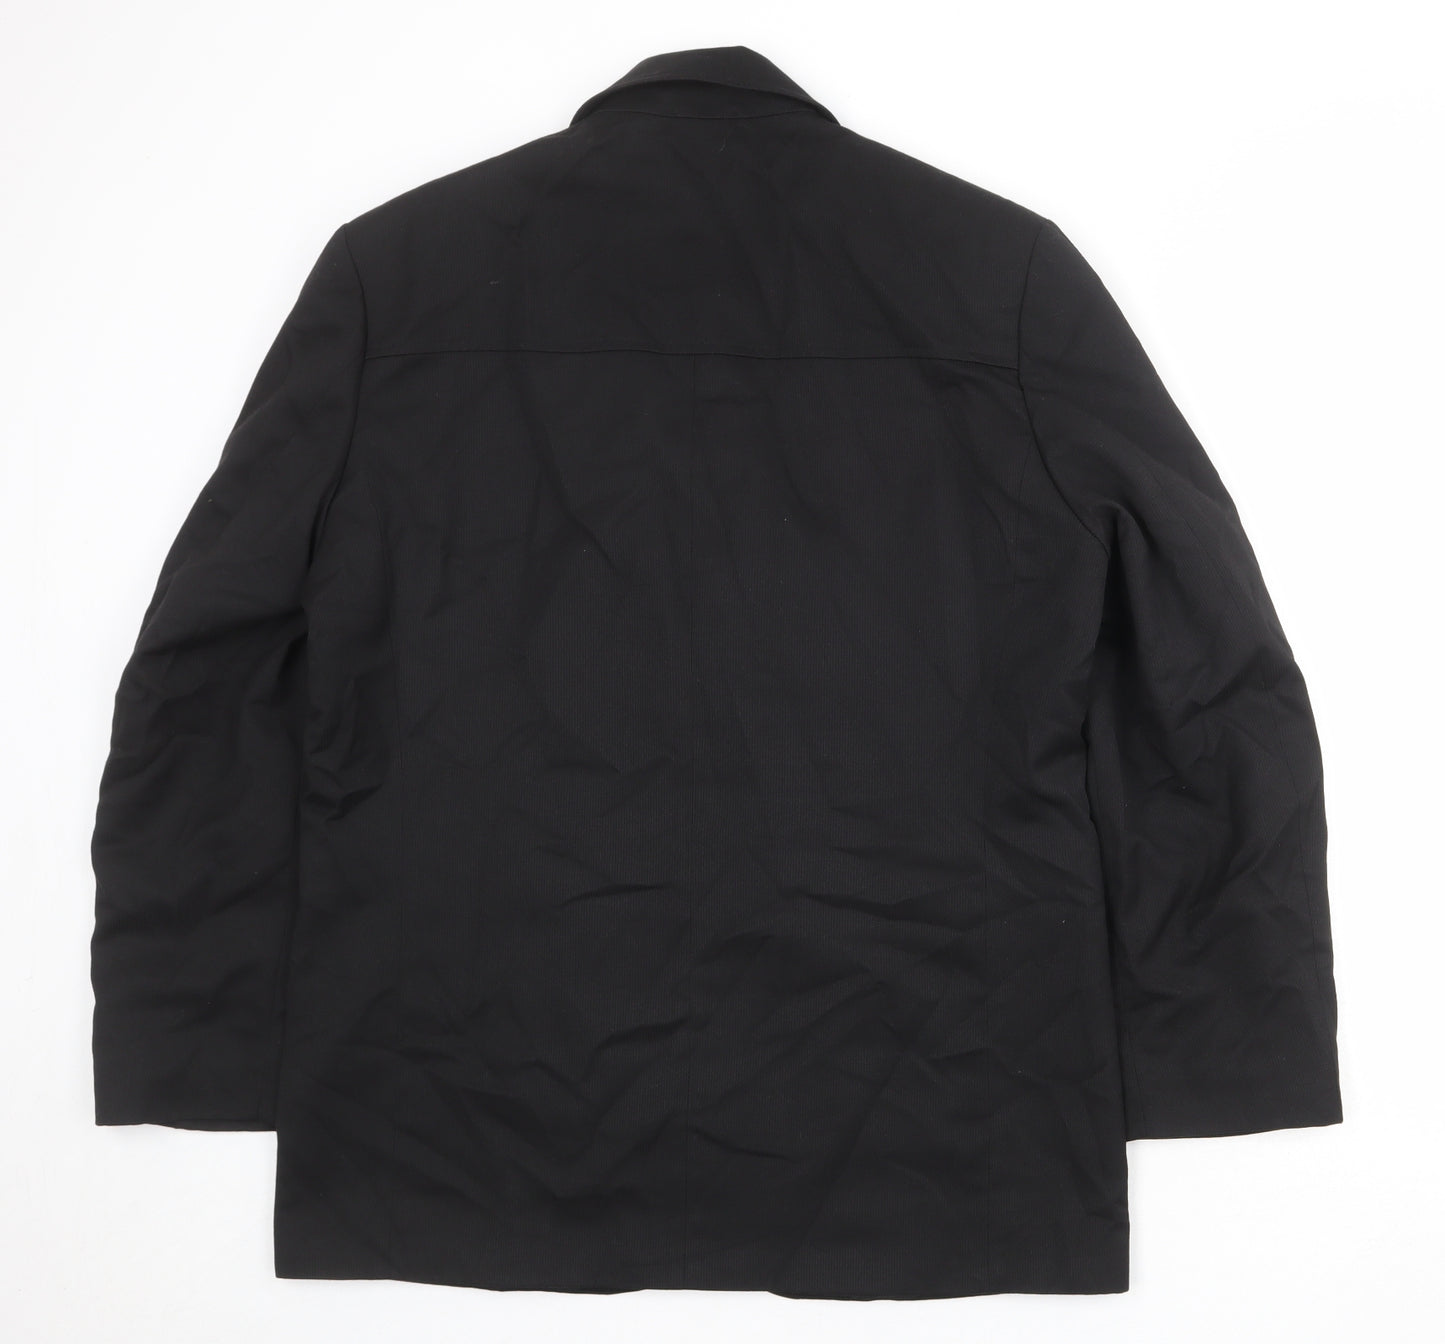 Monitor Mens Black Polyester Jacket Blazer Size 42 Regular